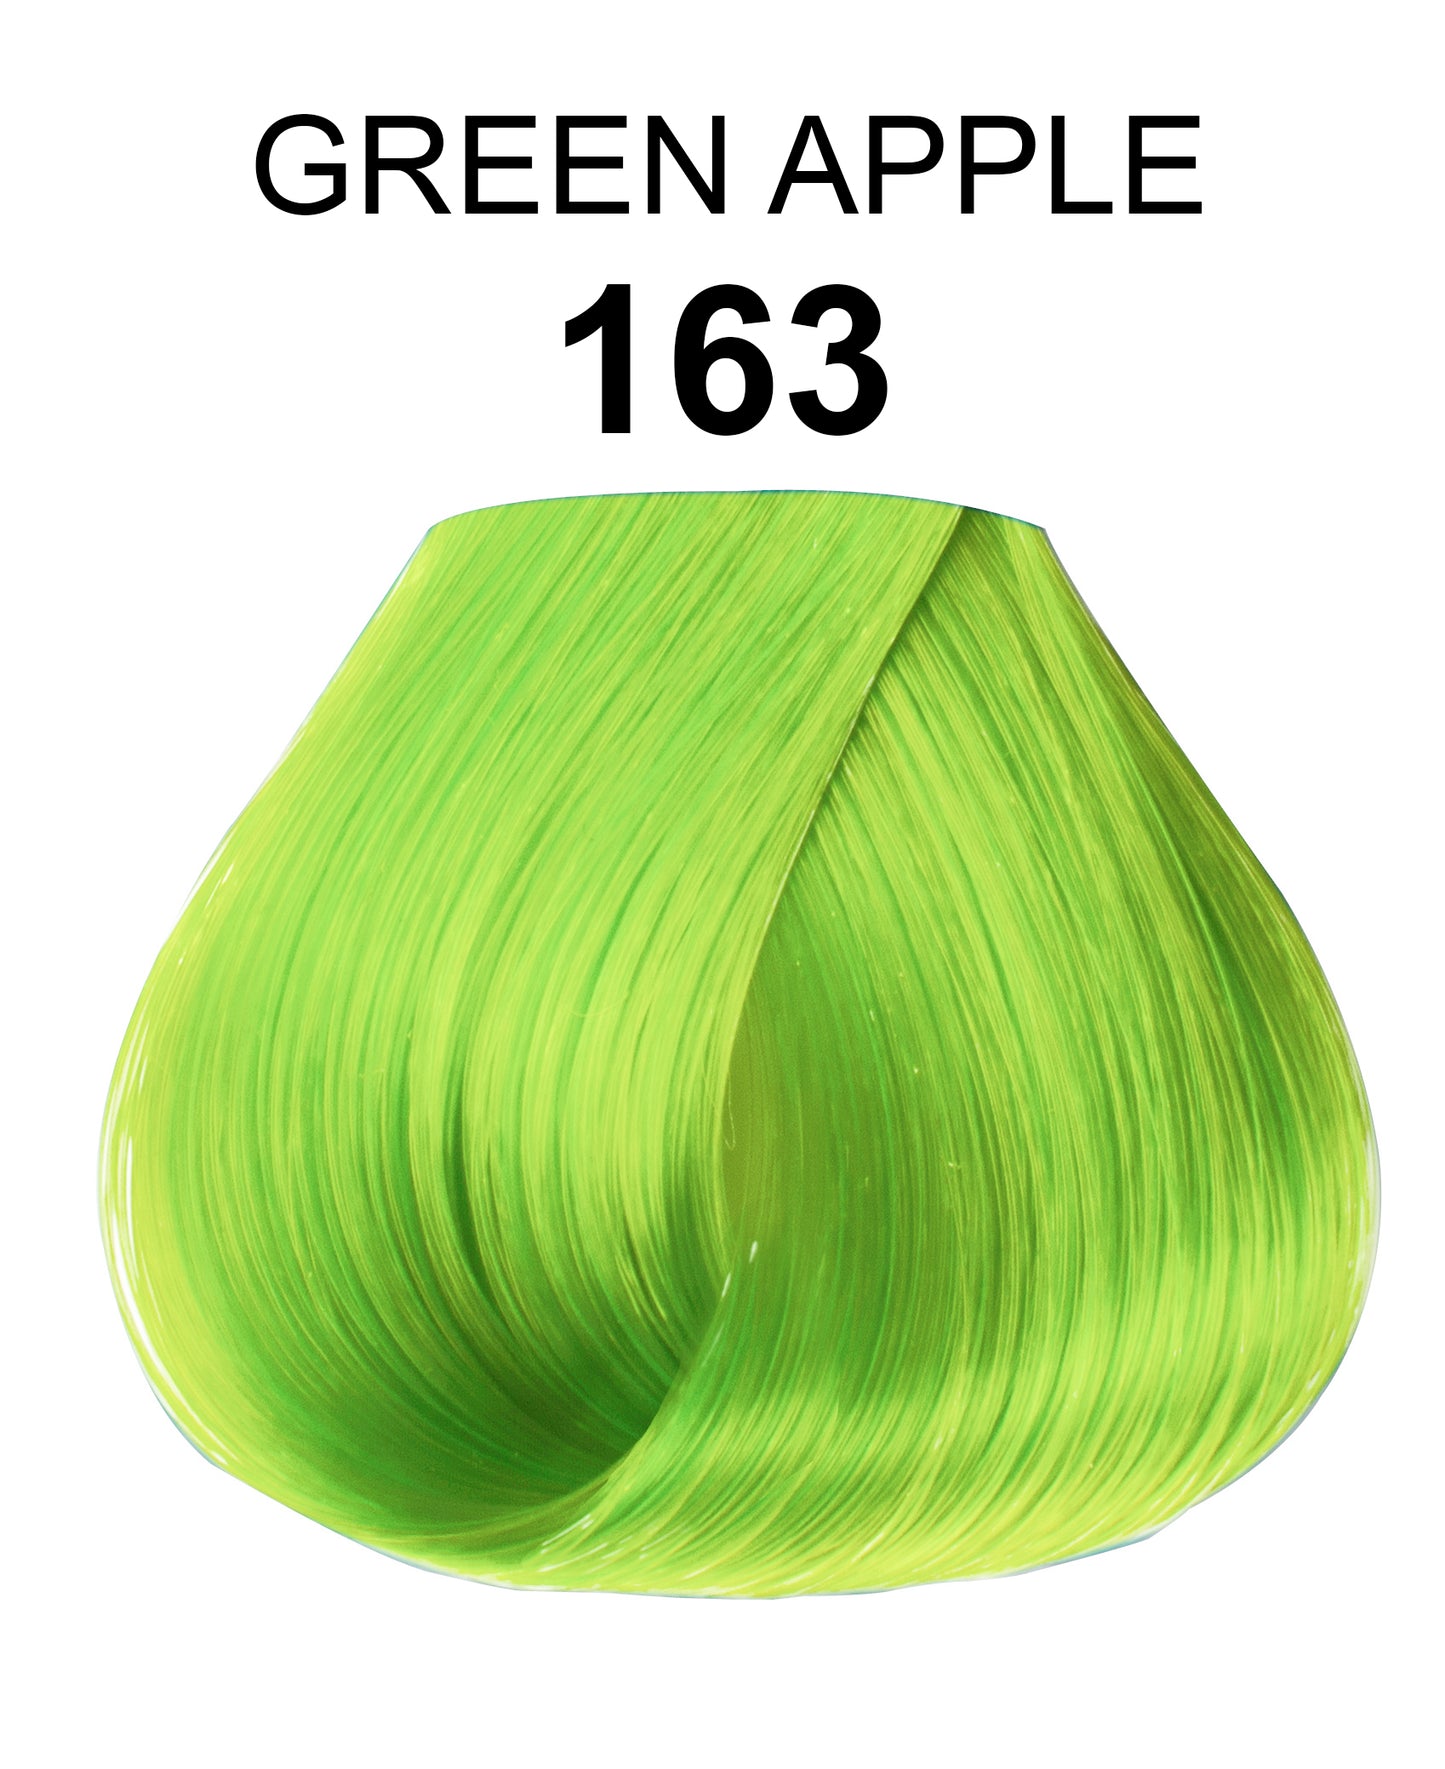 Adore #163 Green Apple